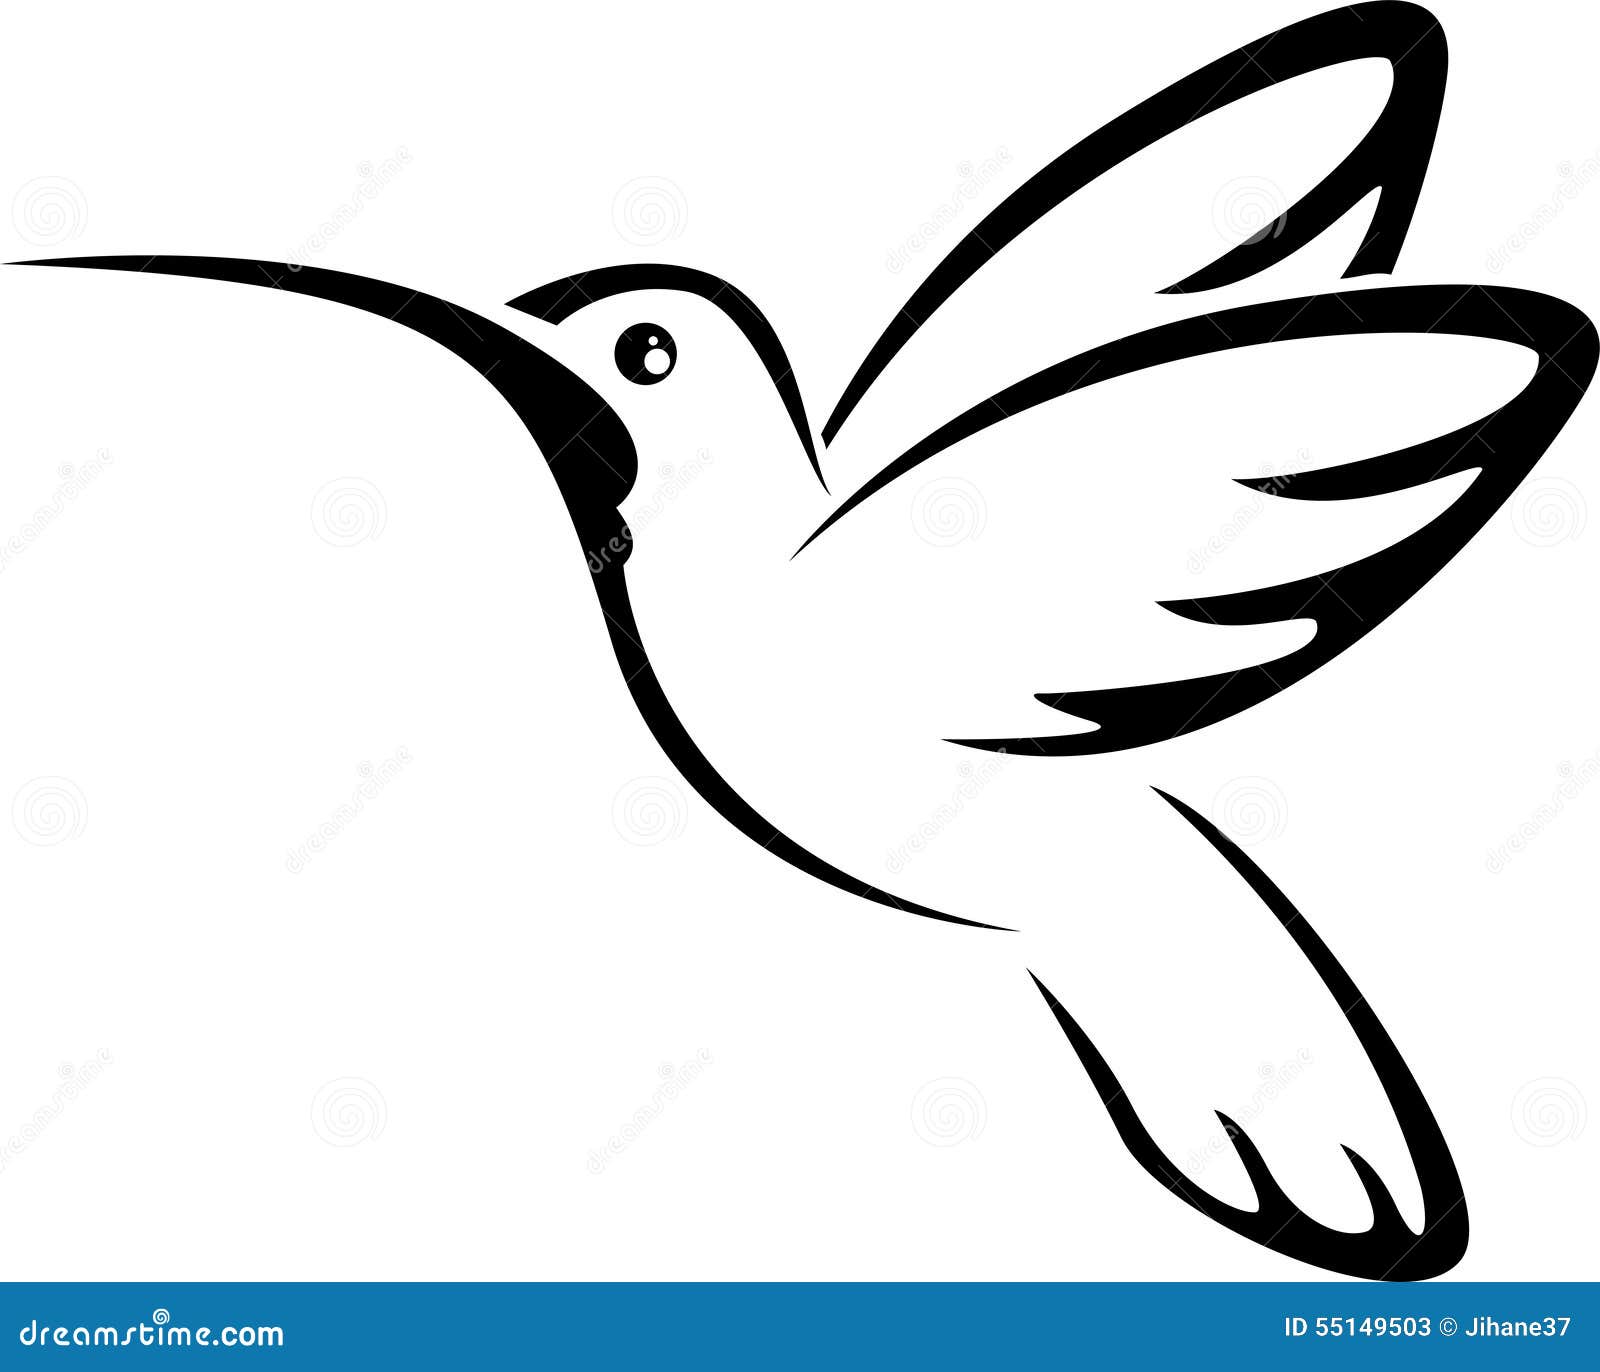 Tattoo Hummingbird For You Design Stock Illustration - Image: 55149503